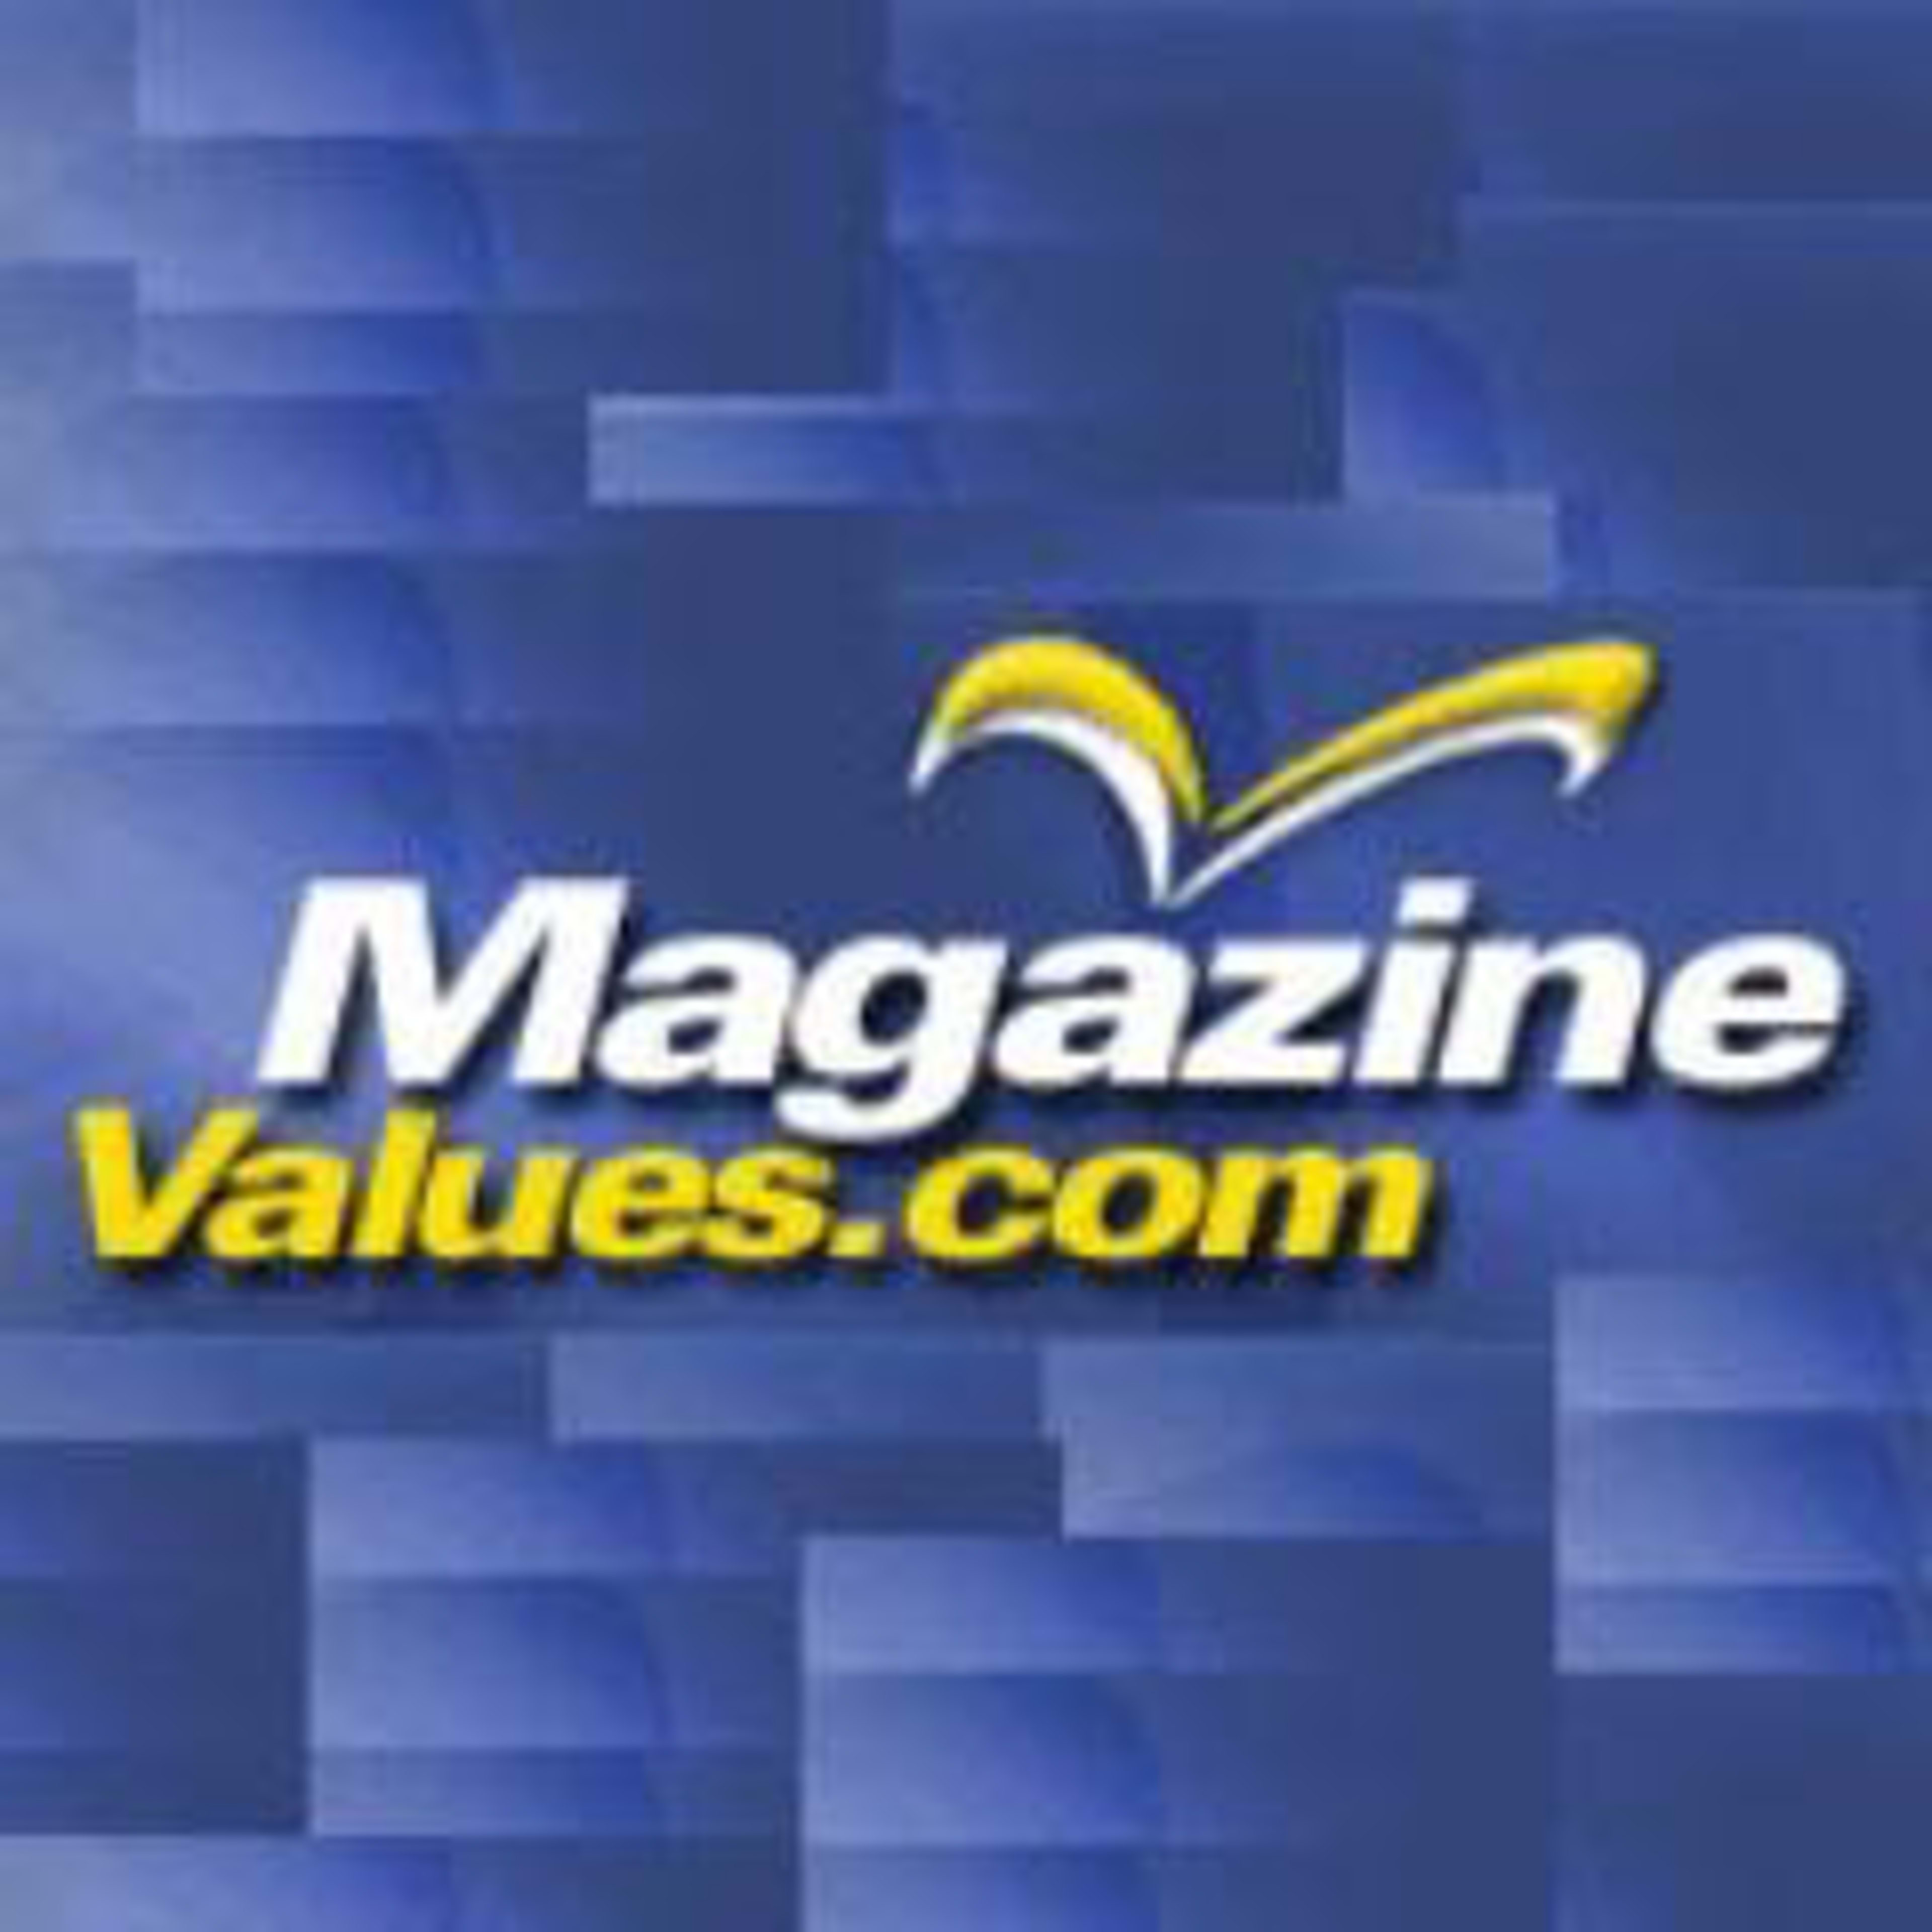 Magazine Values Code